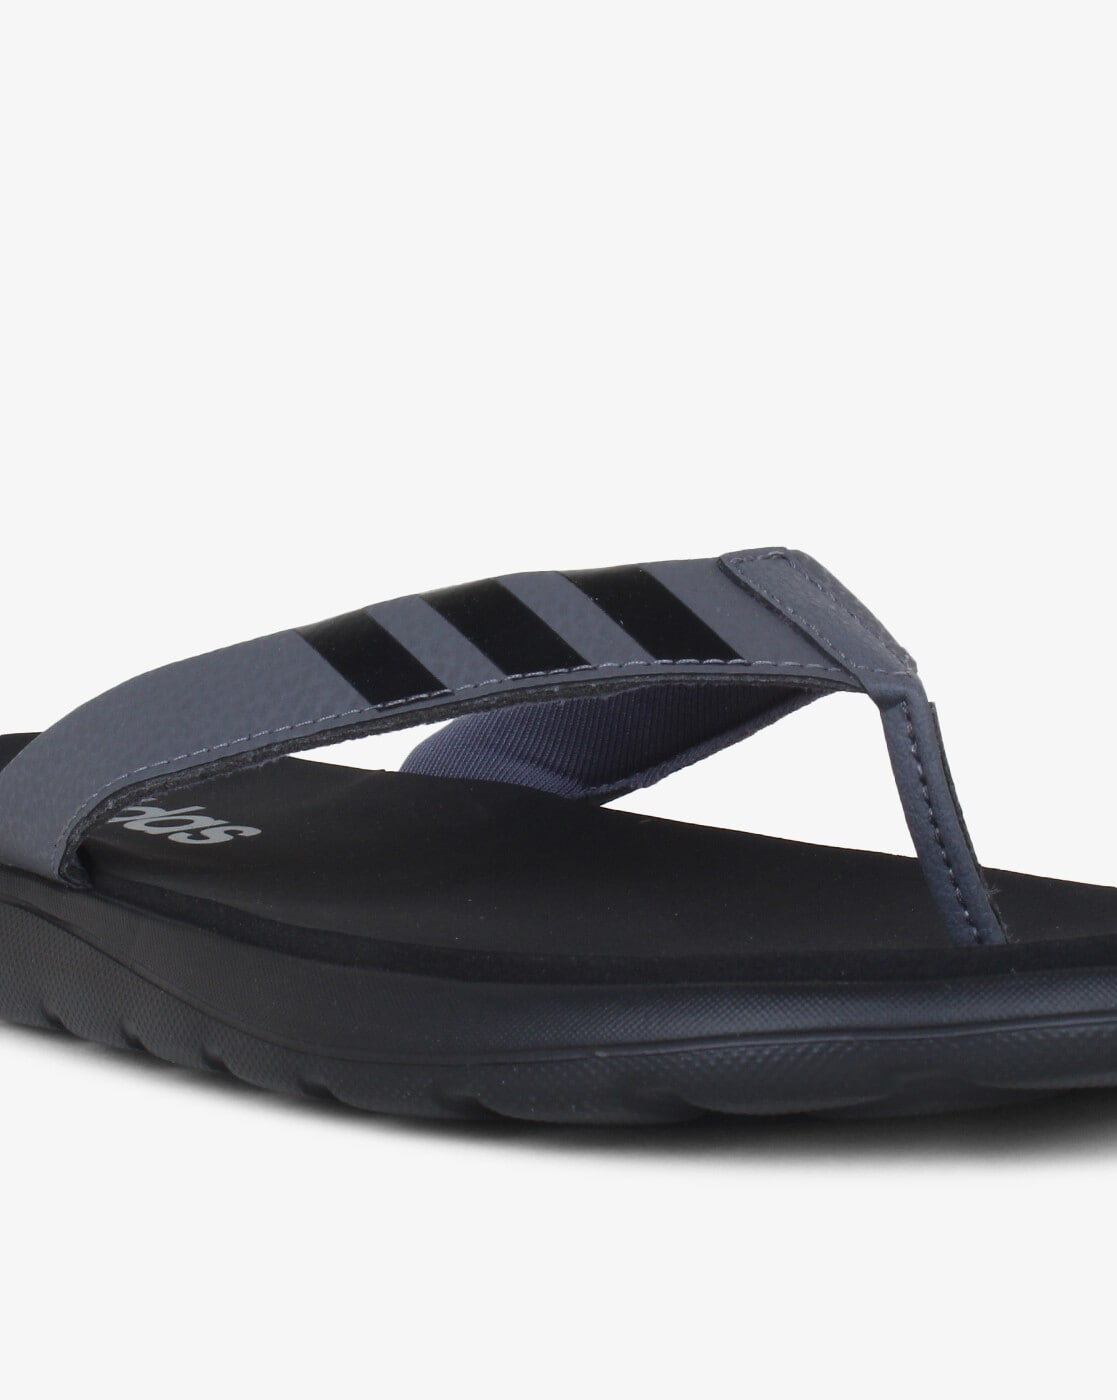 Buy Black Flip & Slippers for Men Online | Ajio.com